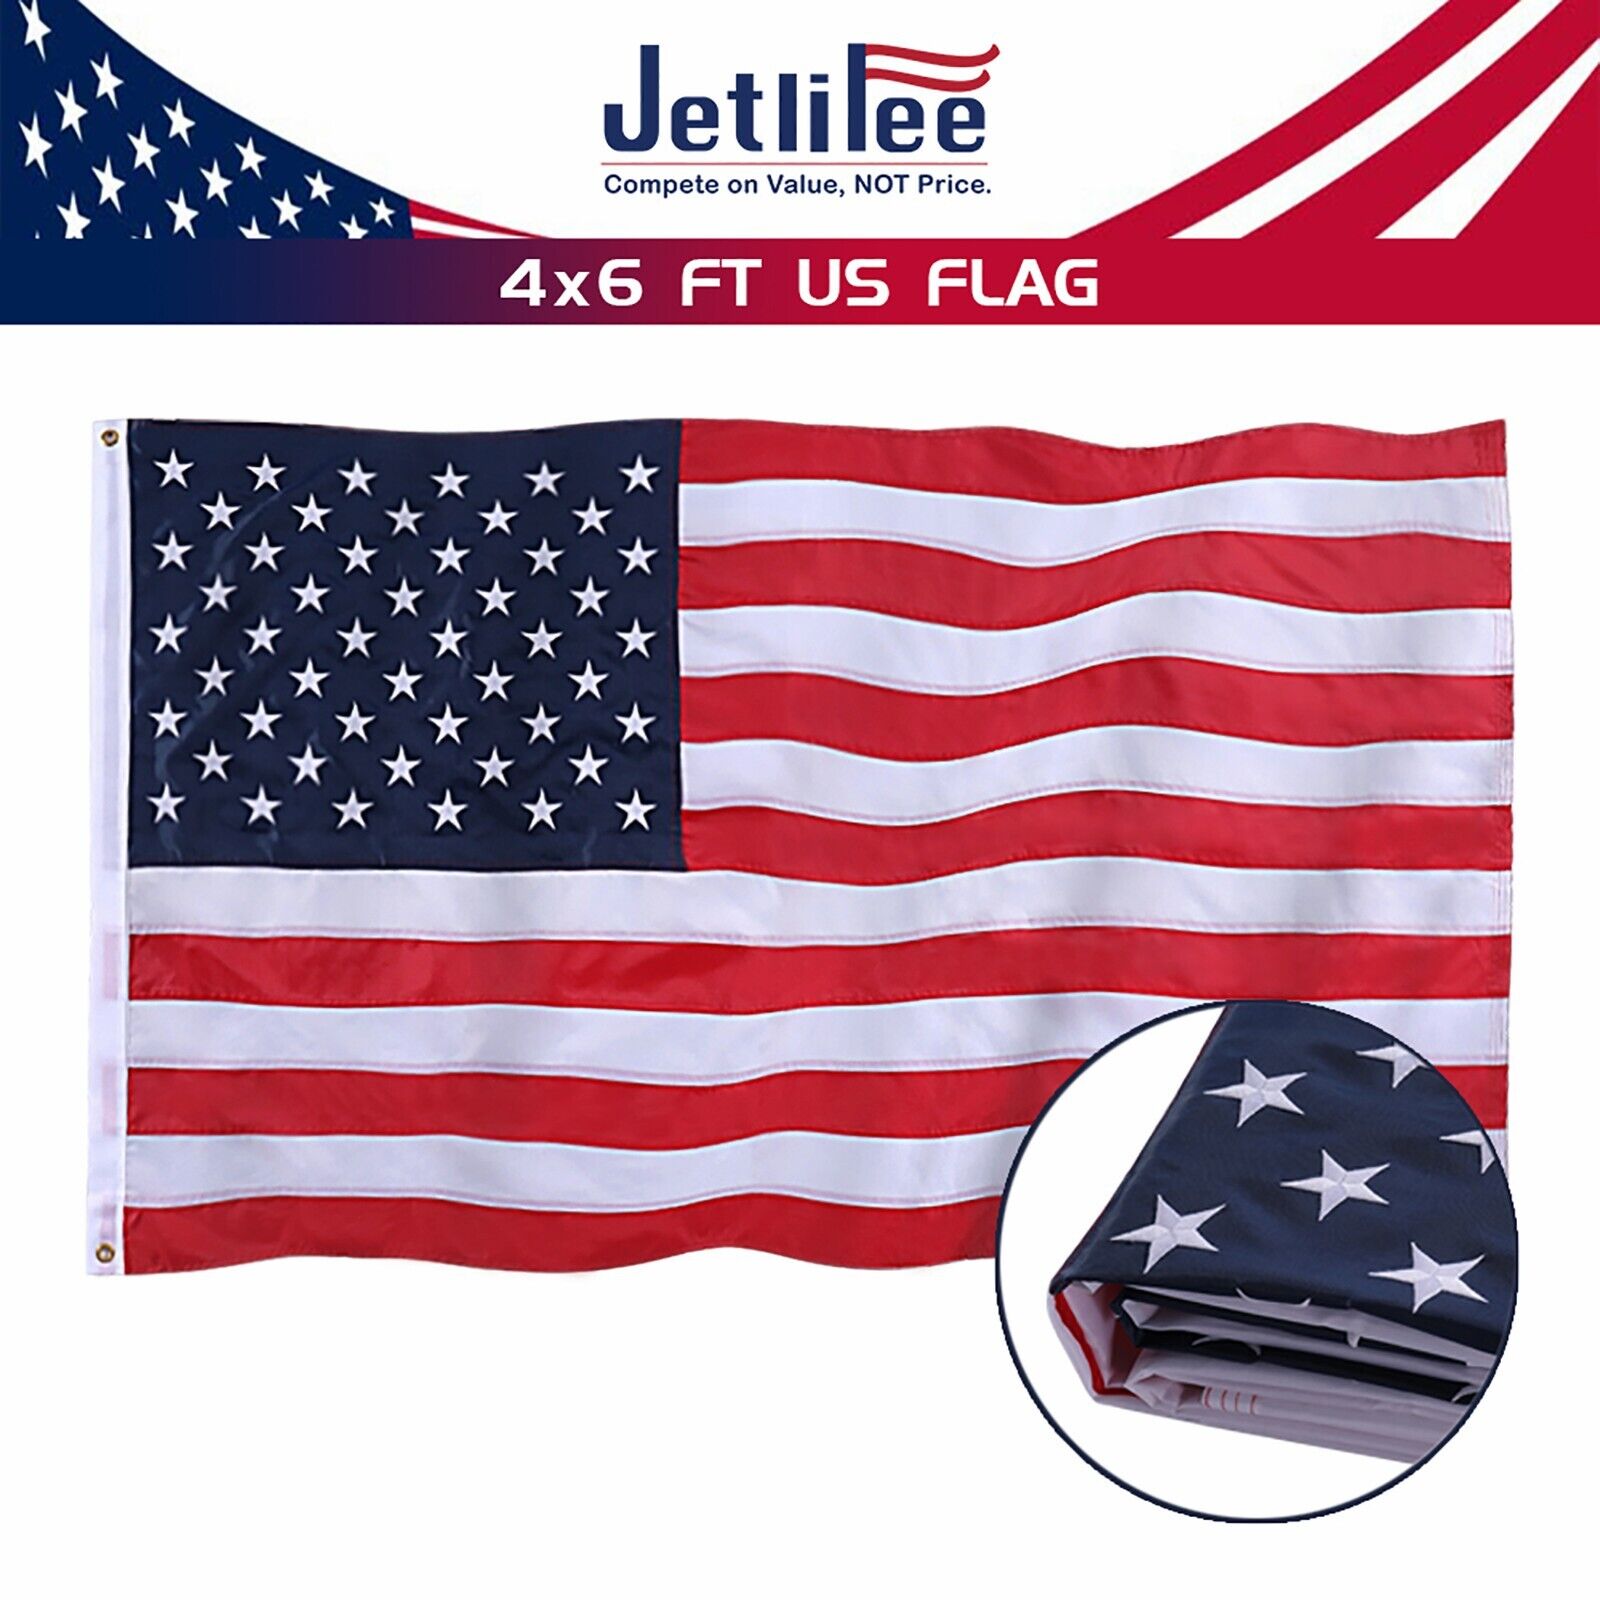 Jetlifee American Flag 4x6ft 210D UV Protected Embroidered Stars Outside US Flag